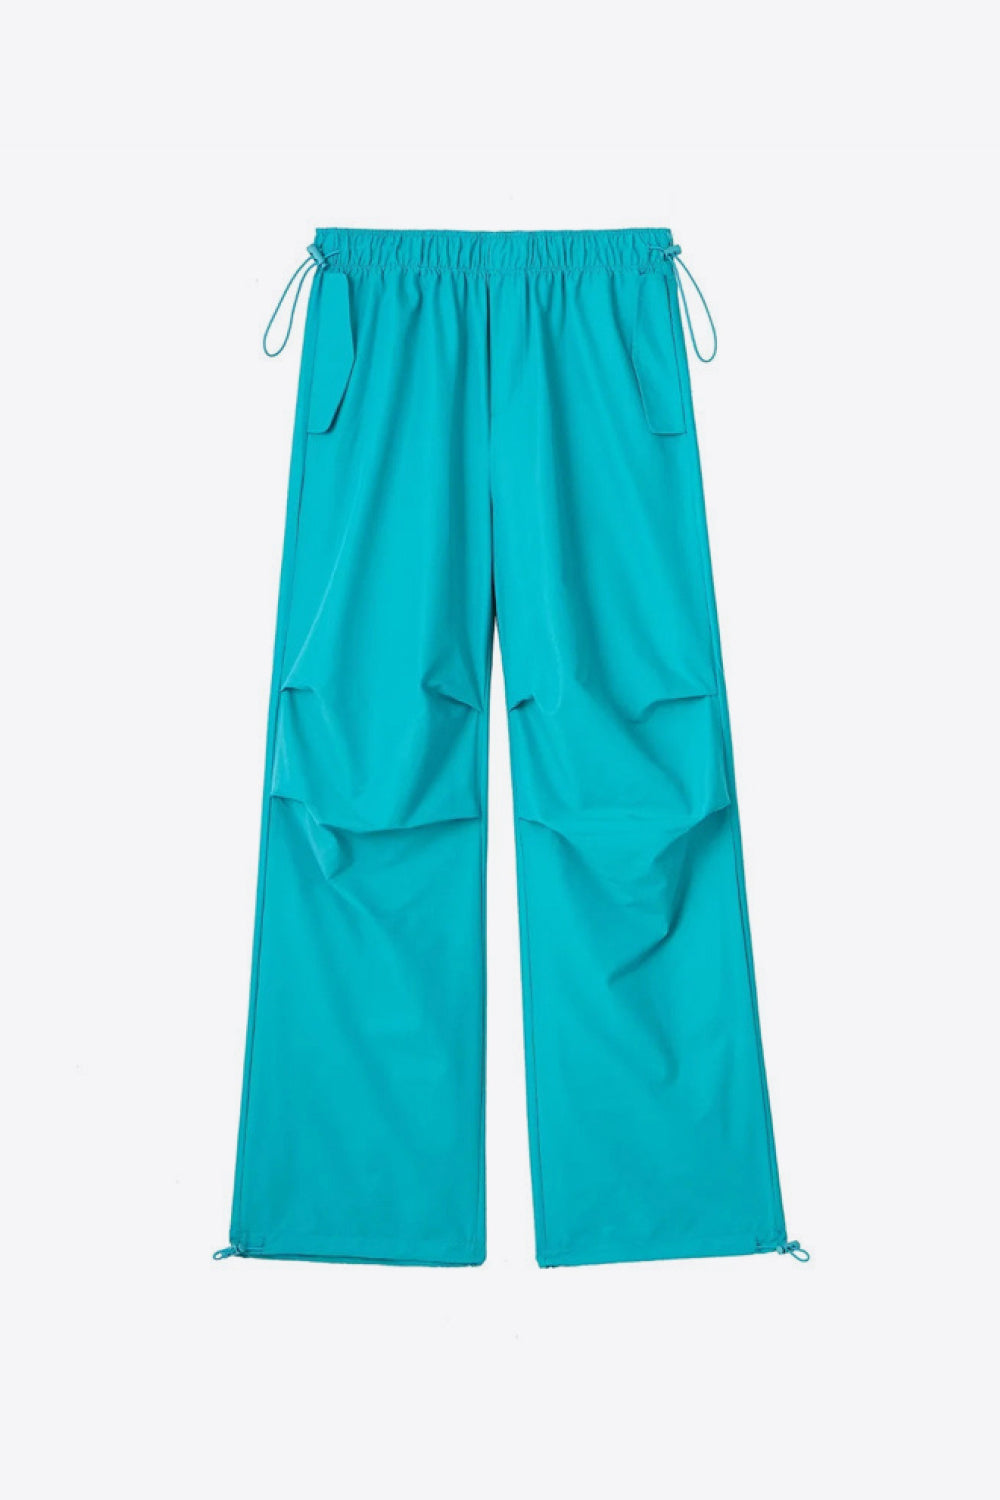 Drawstring Waist Pants with Pockets - Light Blue / XS - Bottoms - Pants - 16 - 2024